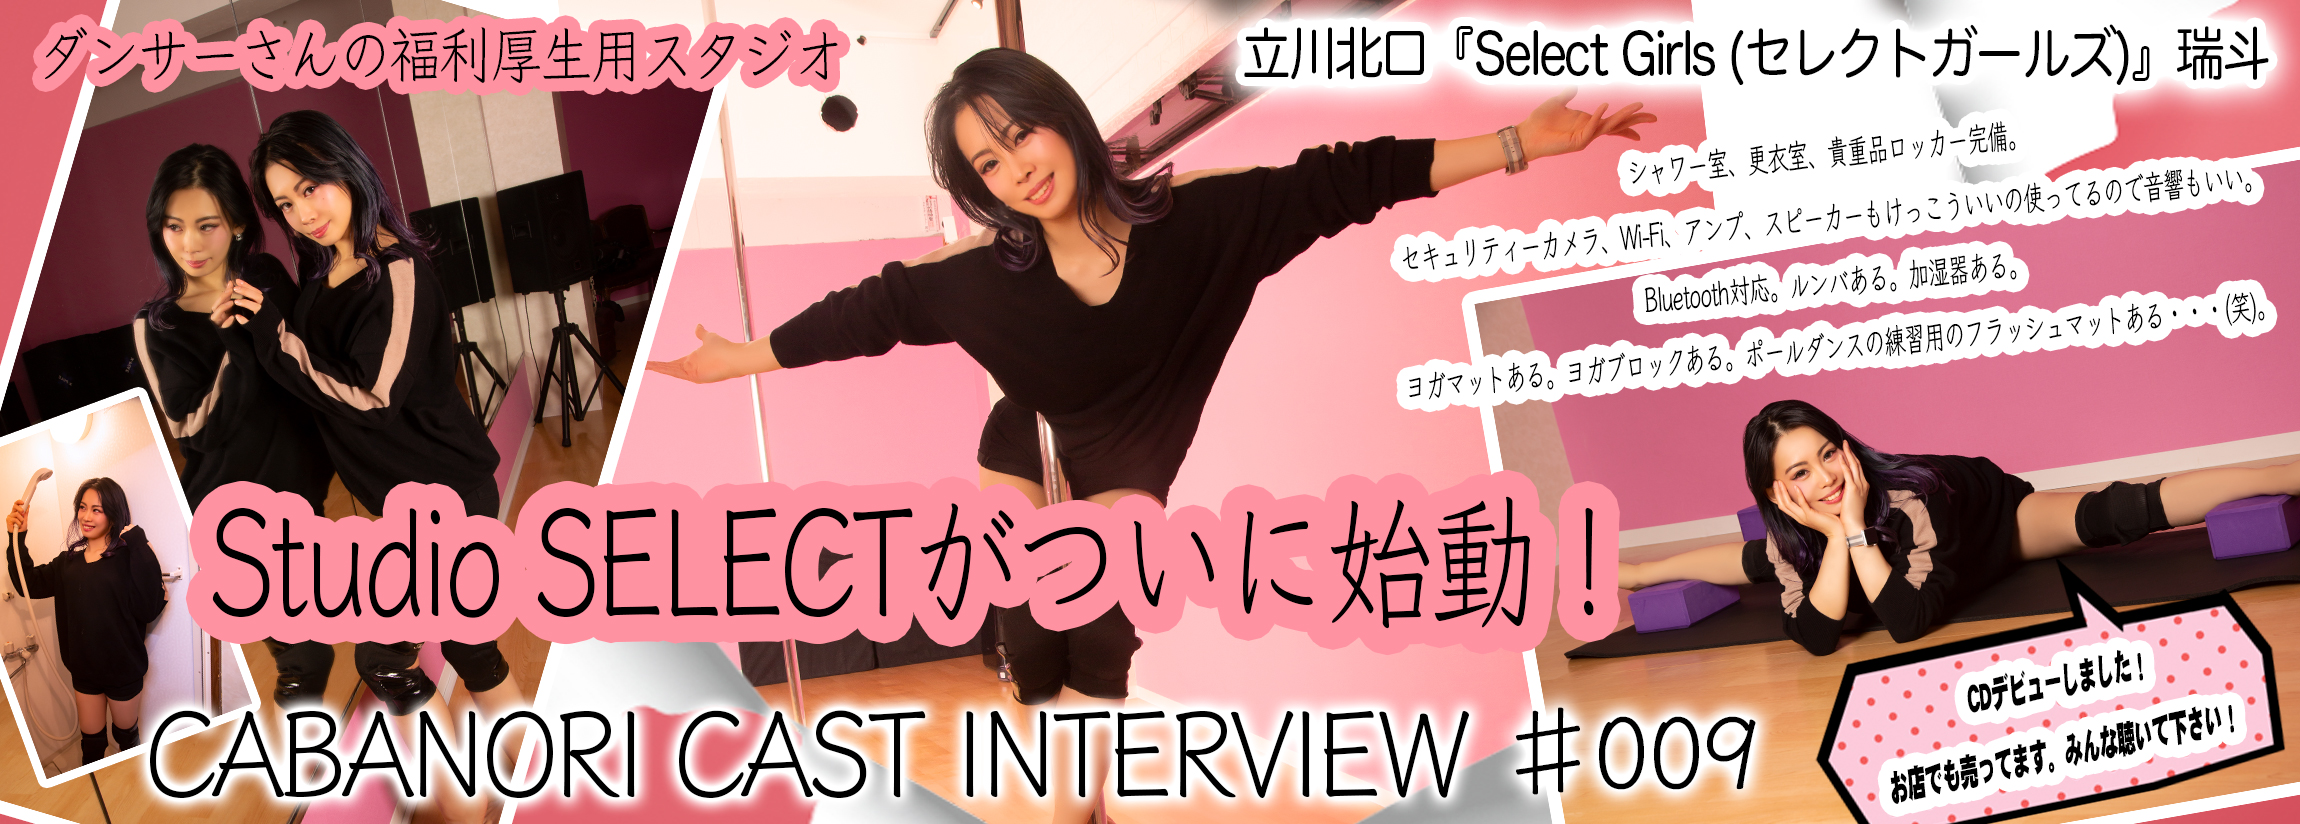 【CAST INTERVIEW】立川北口『Select Girls (セレクトガールズ)』瑞斗♯2